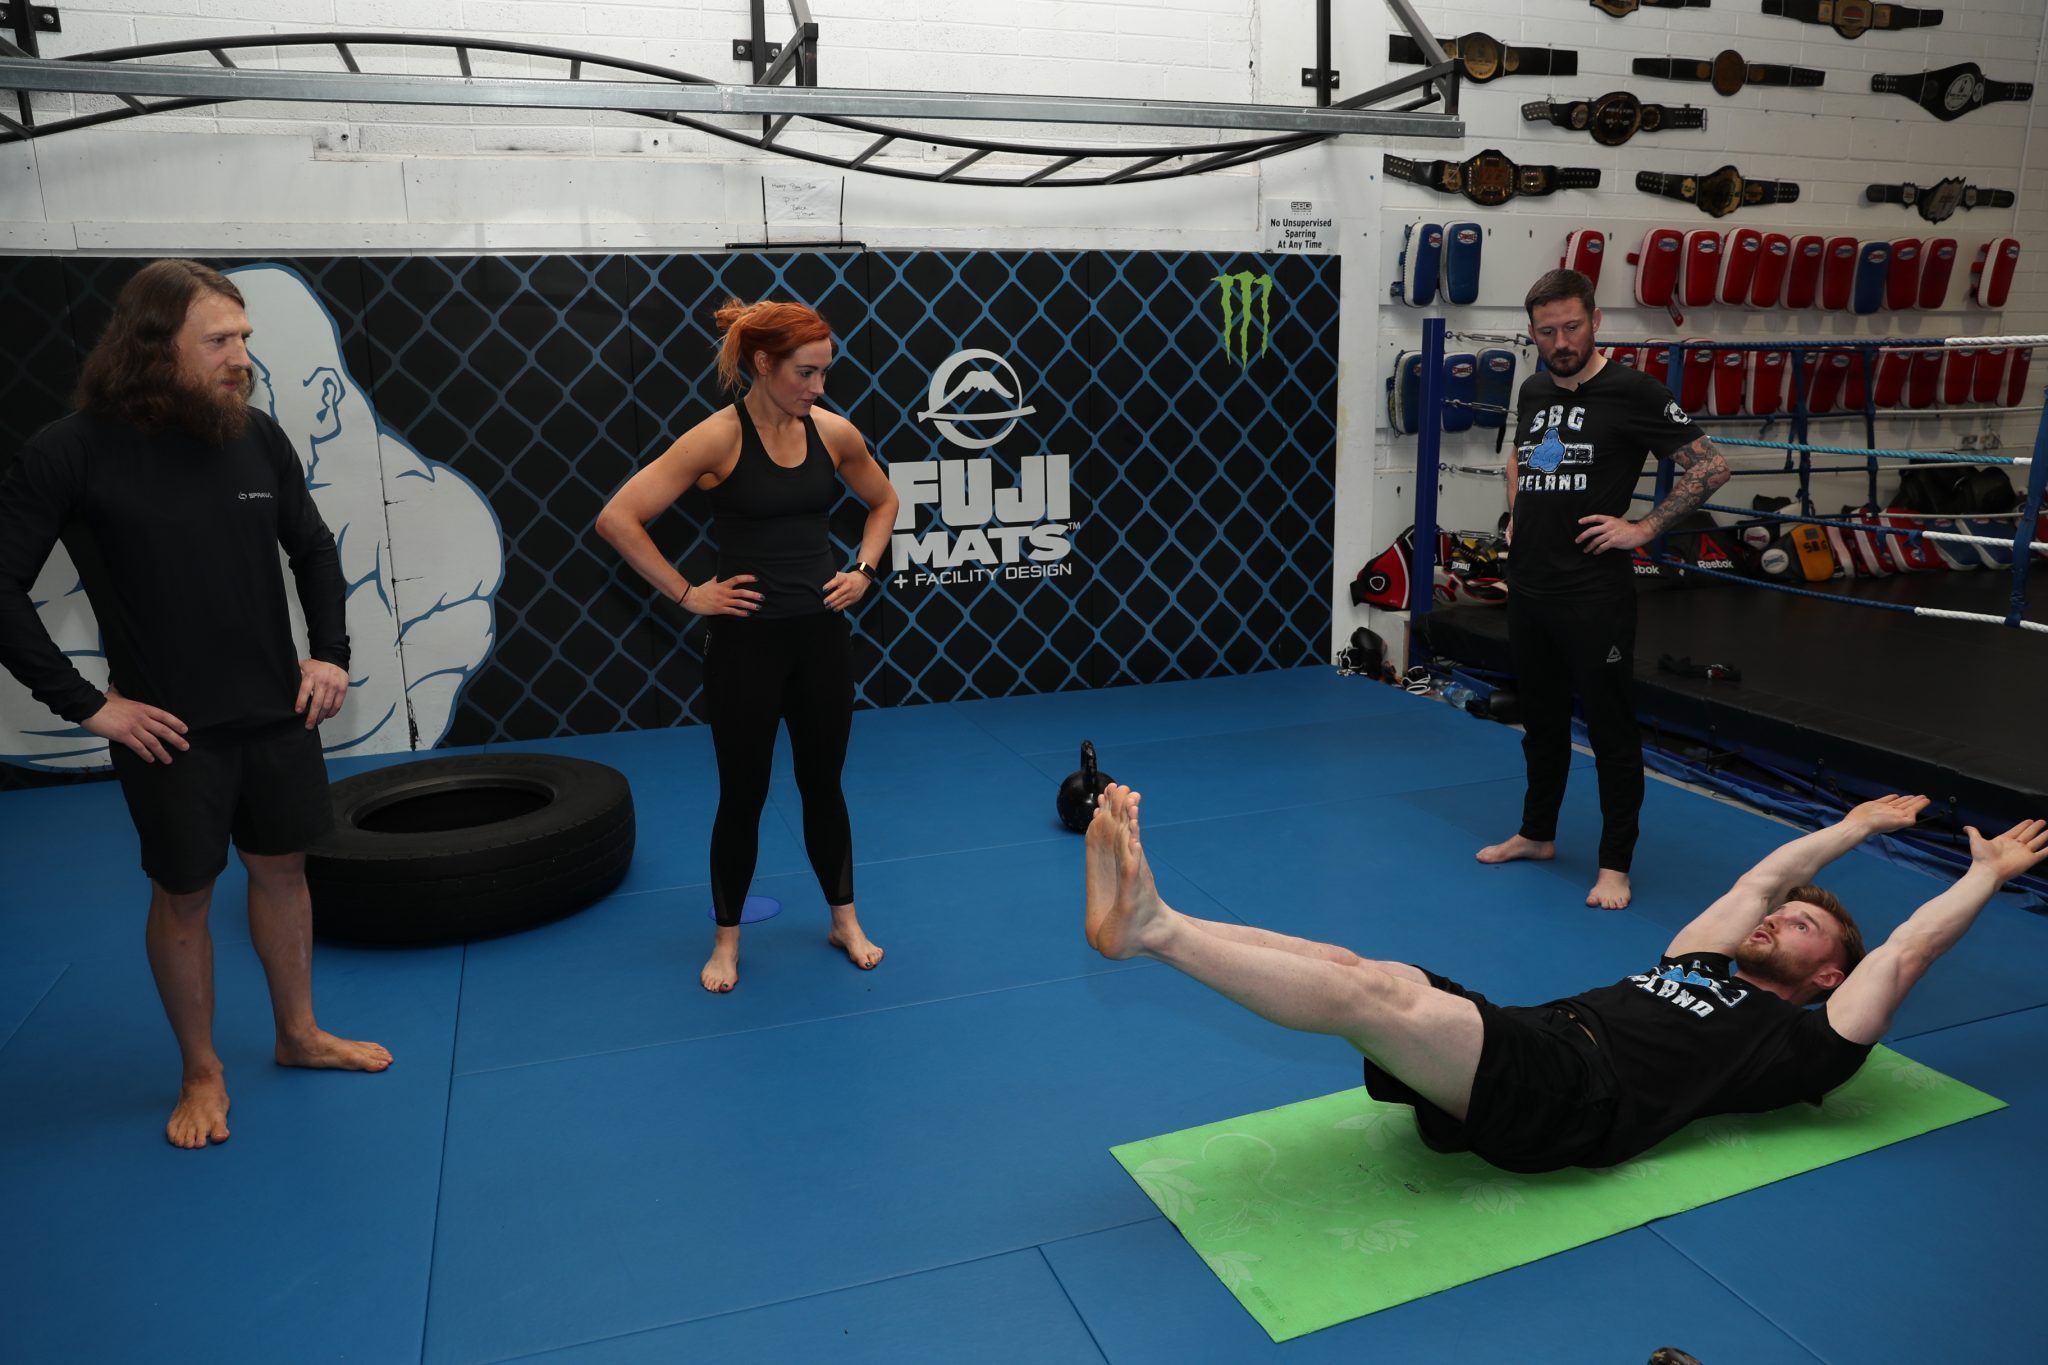 Conor McGregor's coach puts WWE superstars through a gym workout | JOE.co.uk2048 x 1365